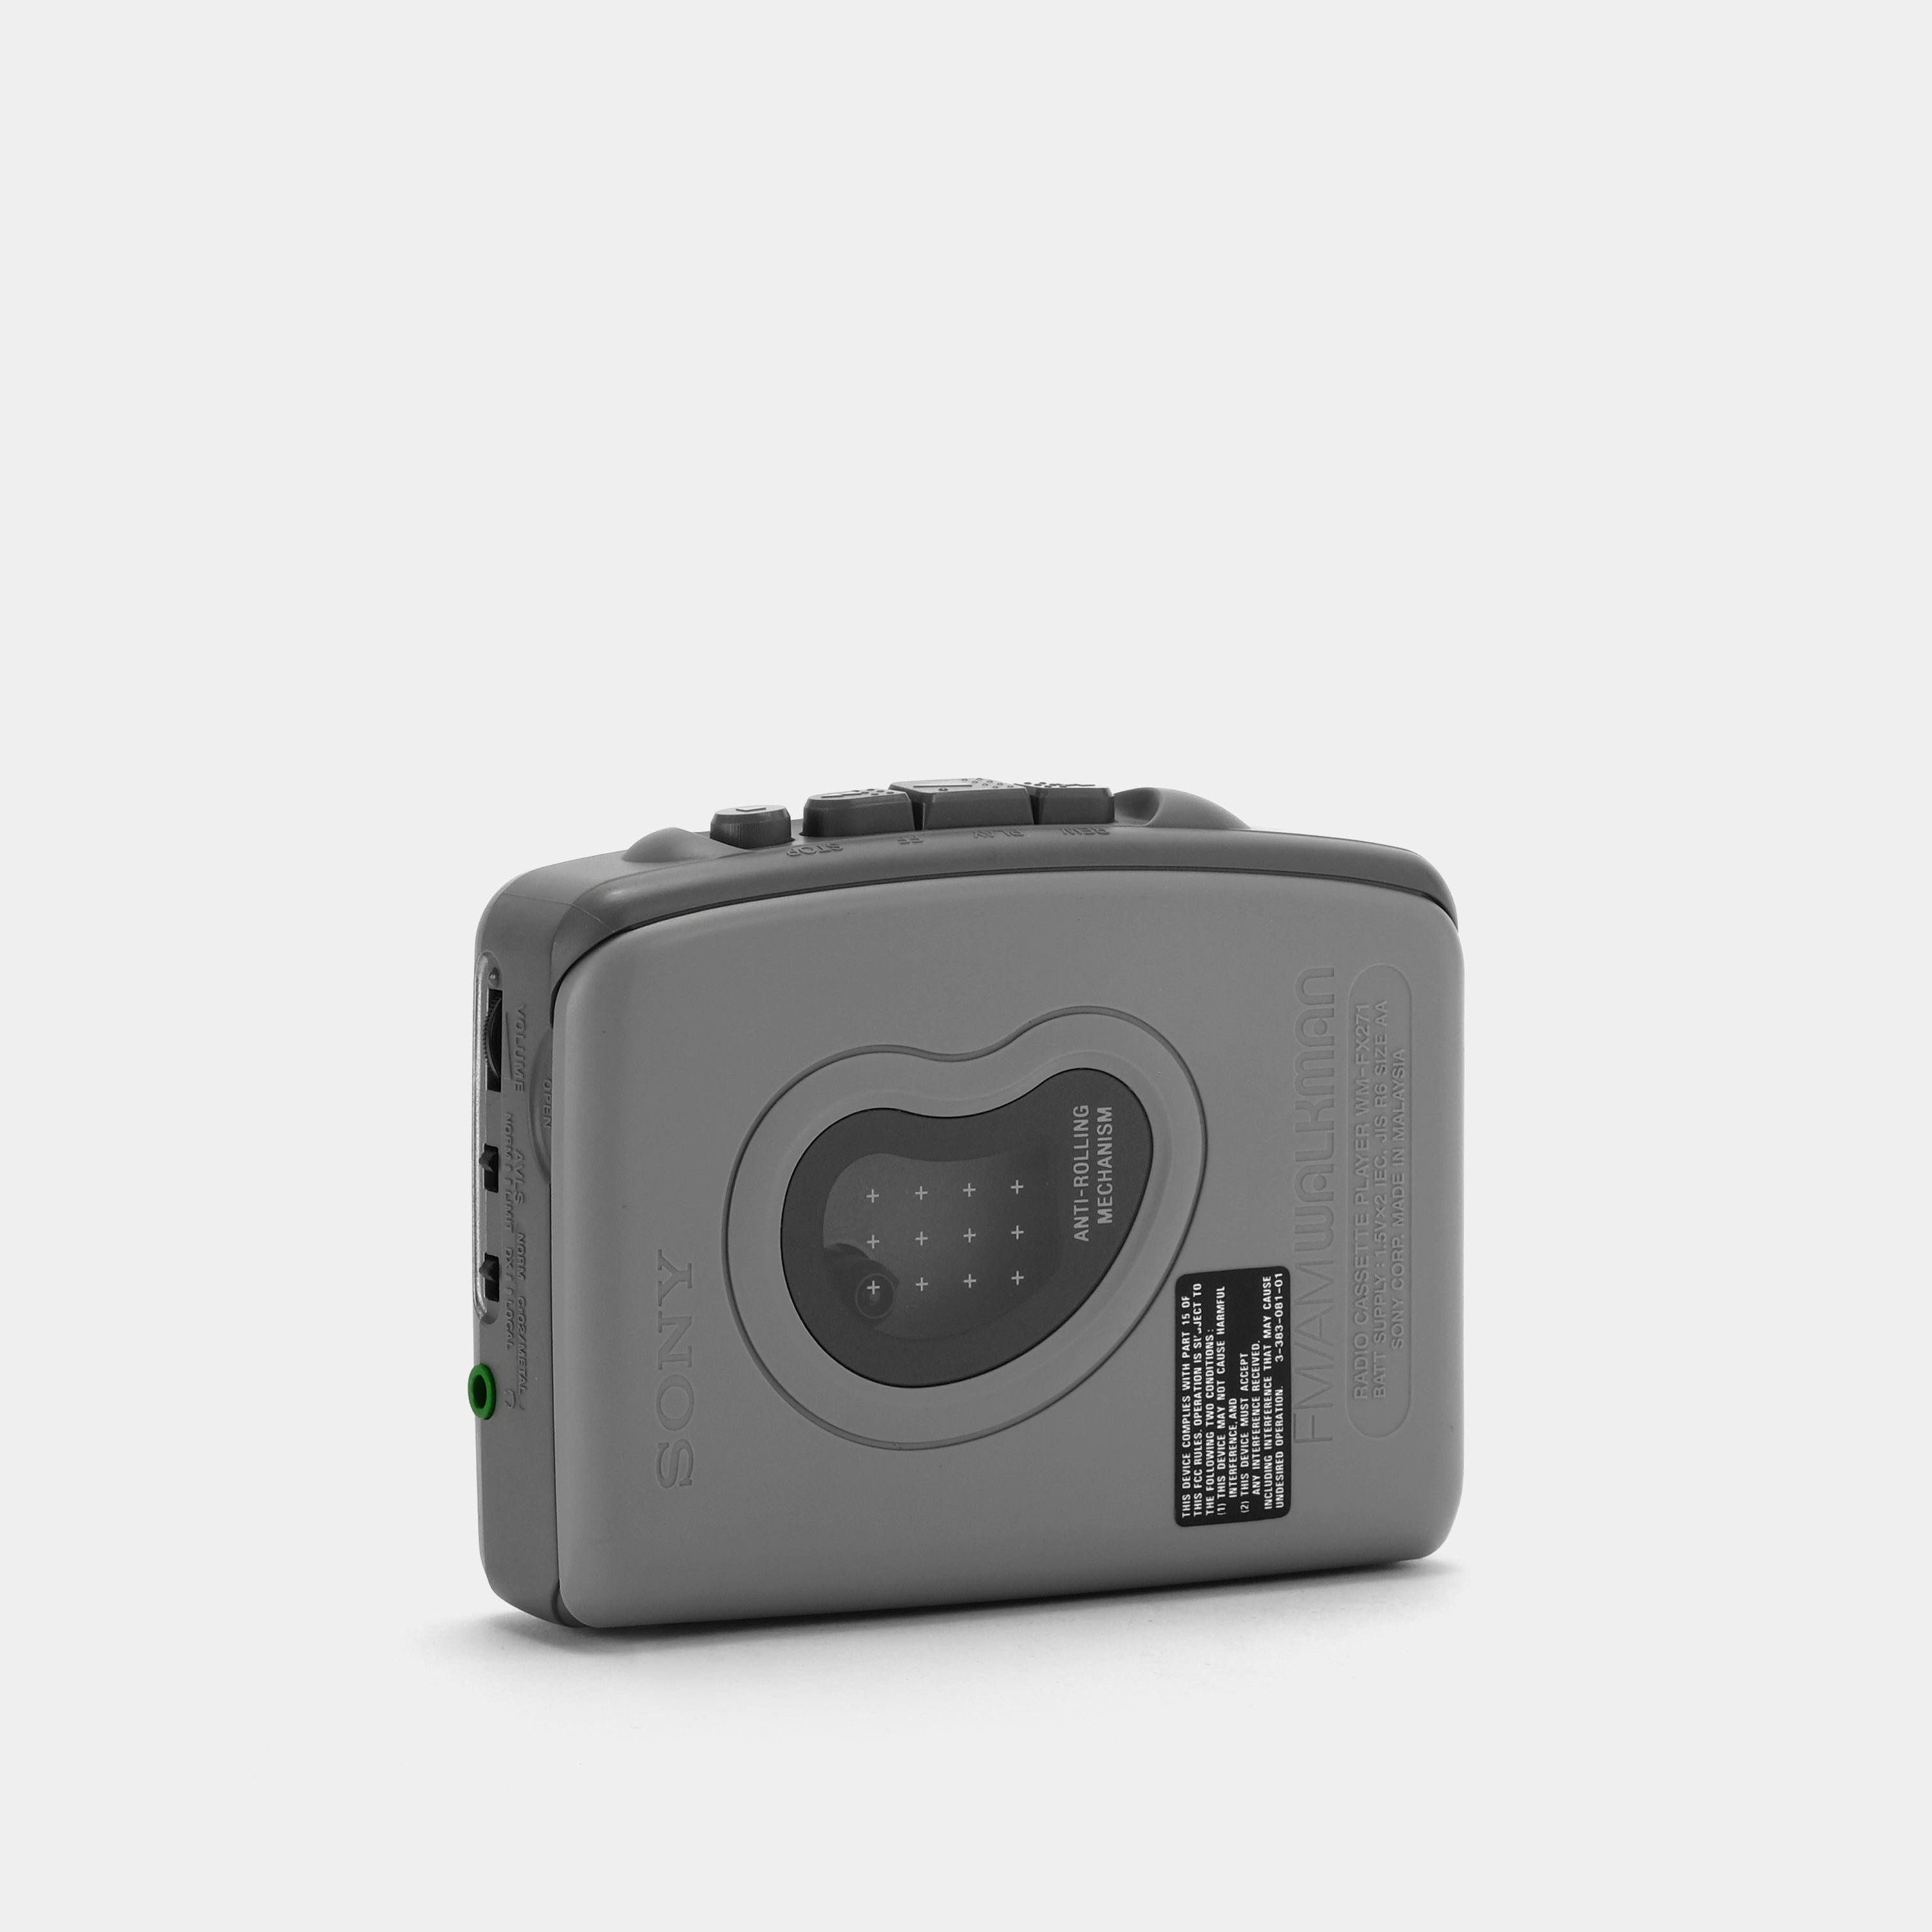 Sony Walkman WM-FX271 AM/FM Portable Cassette Player (B-grade)